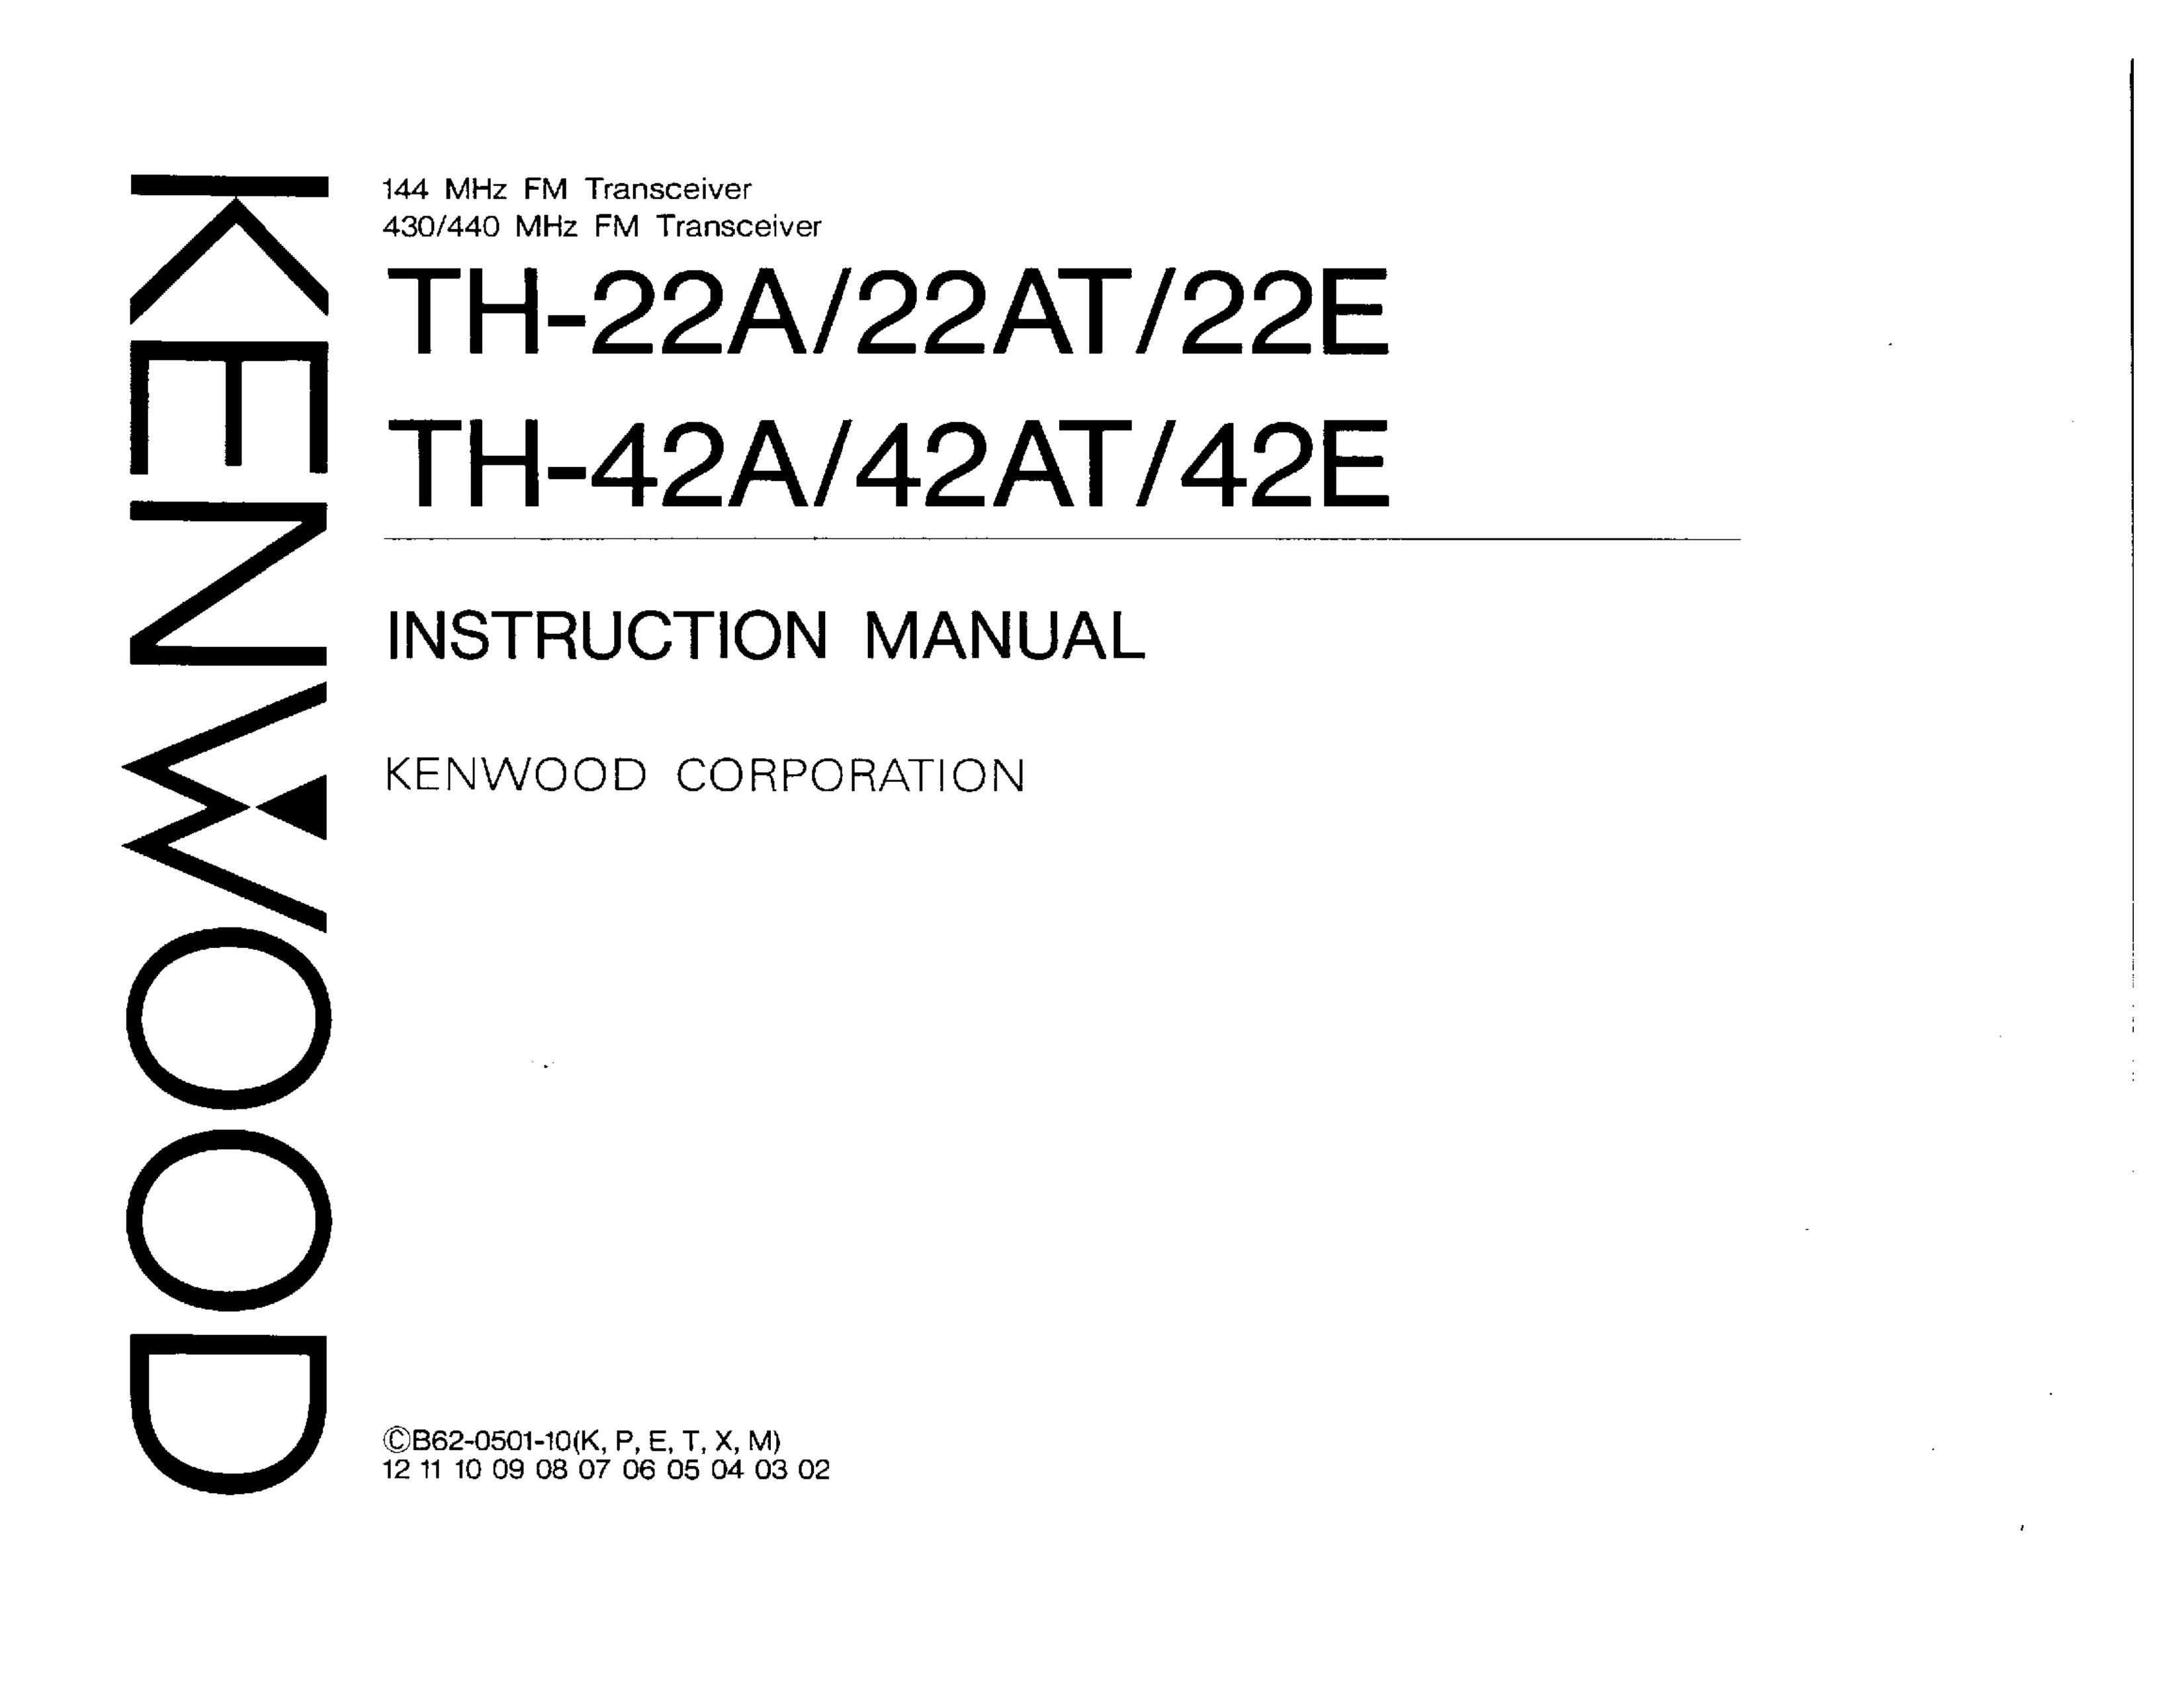 Kenwood TH-22A Marine Radio User Manual